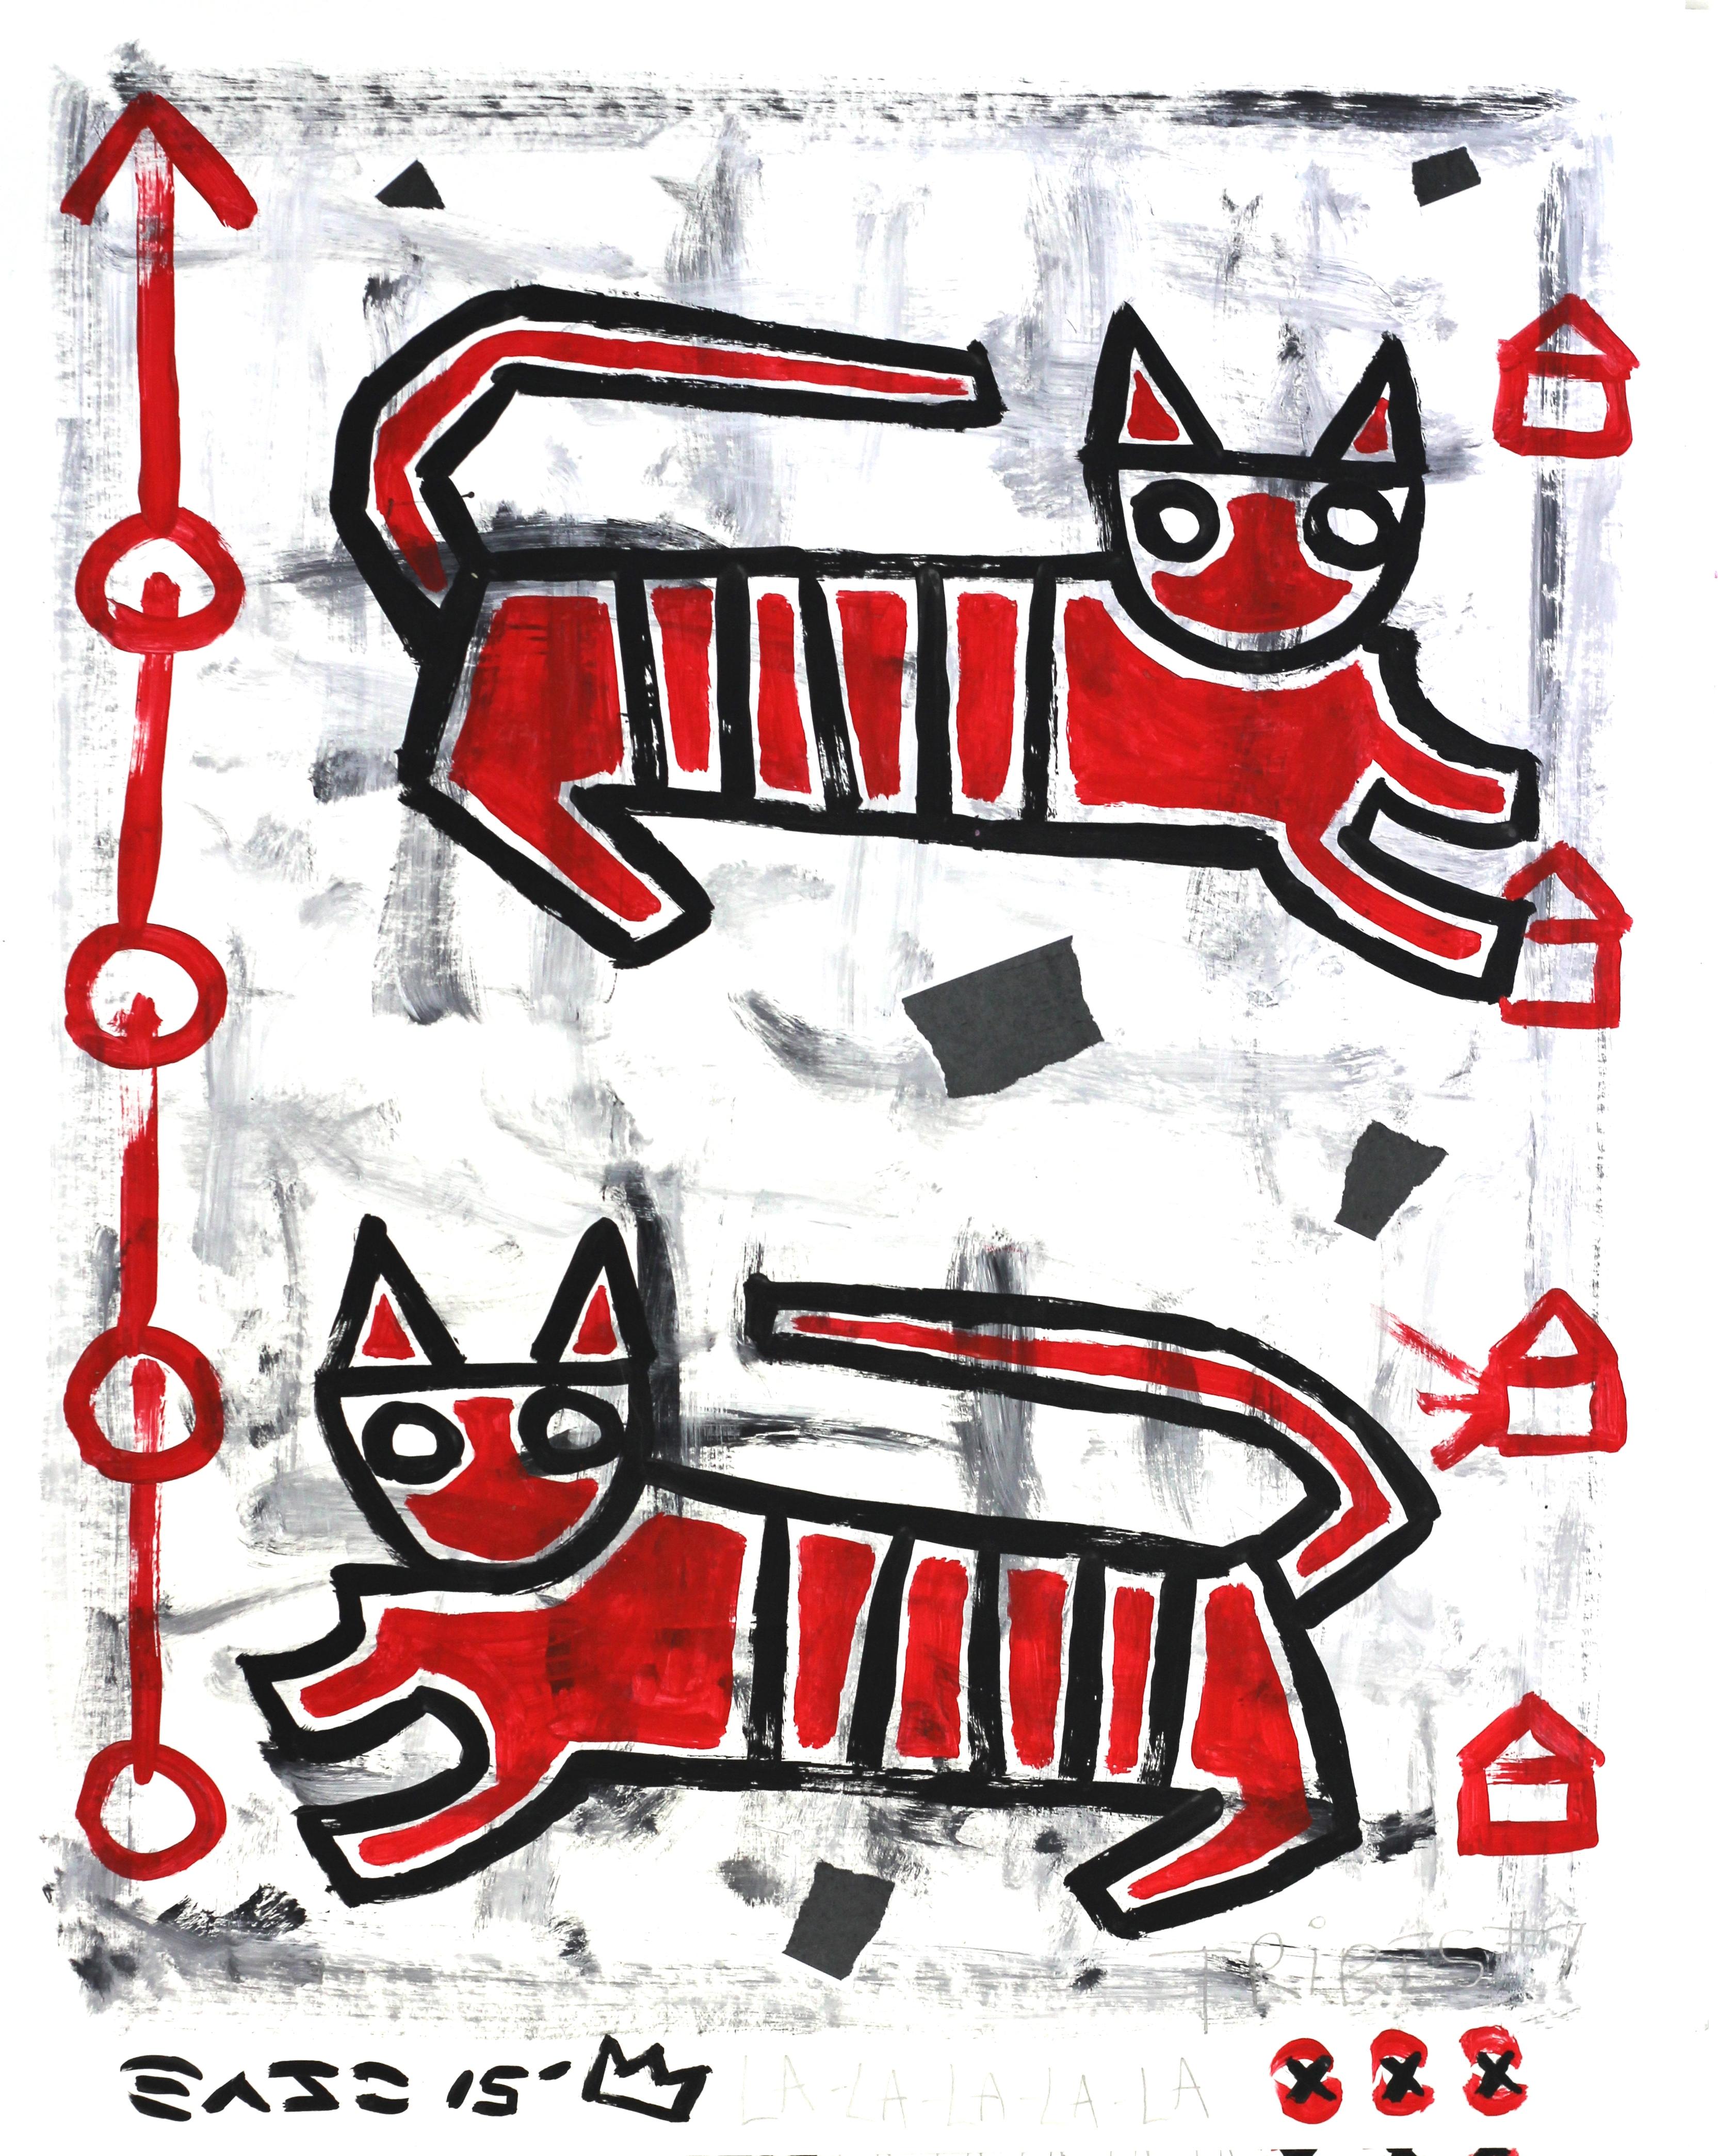 "Double Trouble" Original Red Cat Pop Art by Gary John